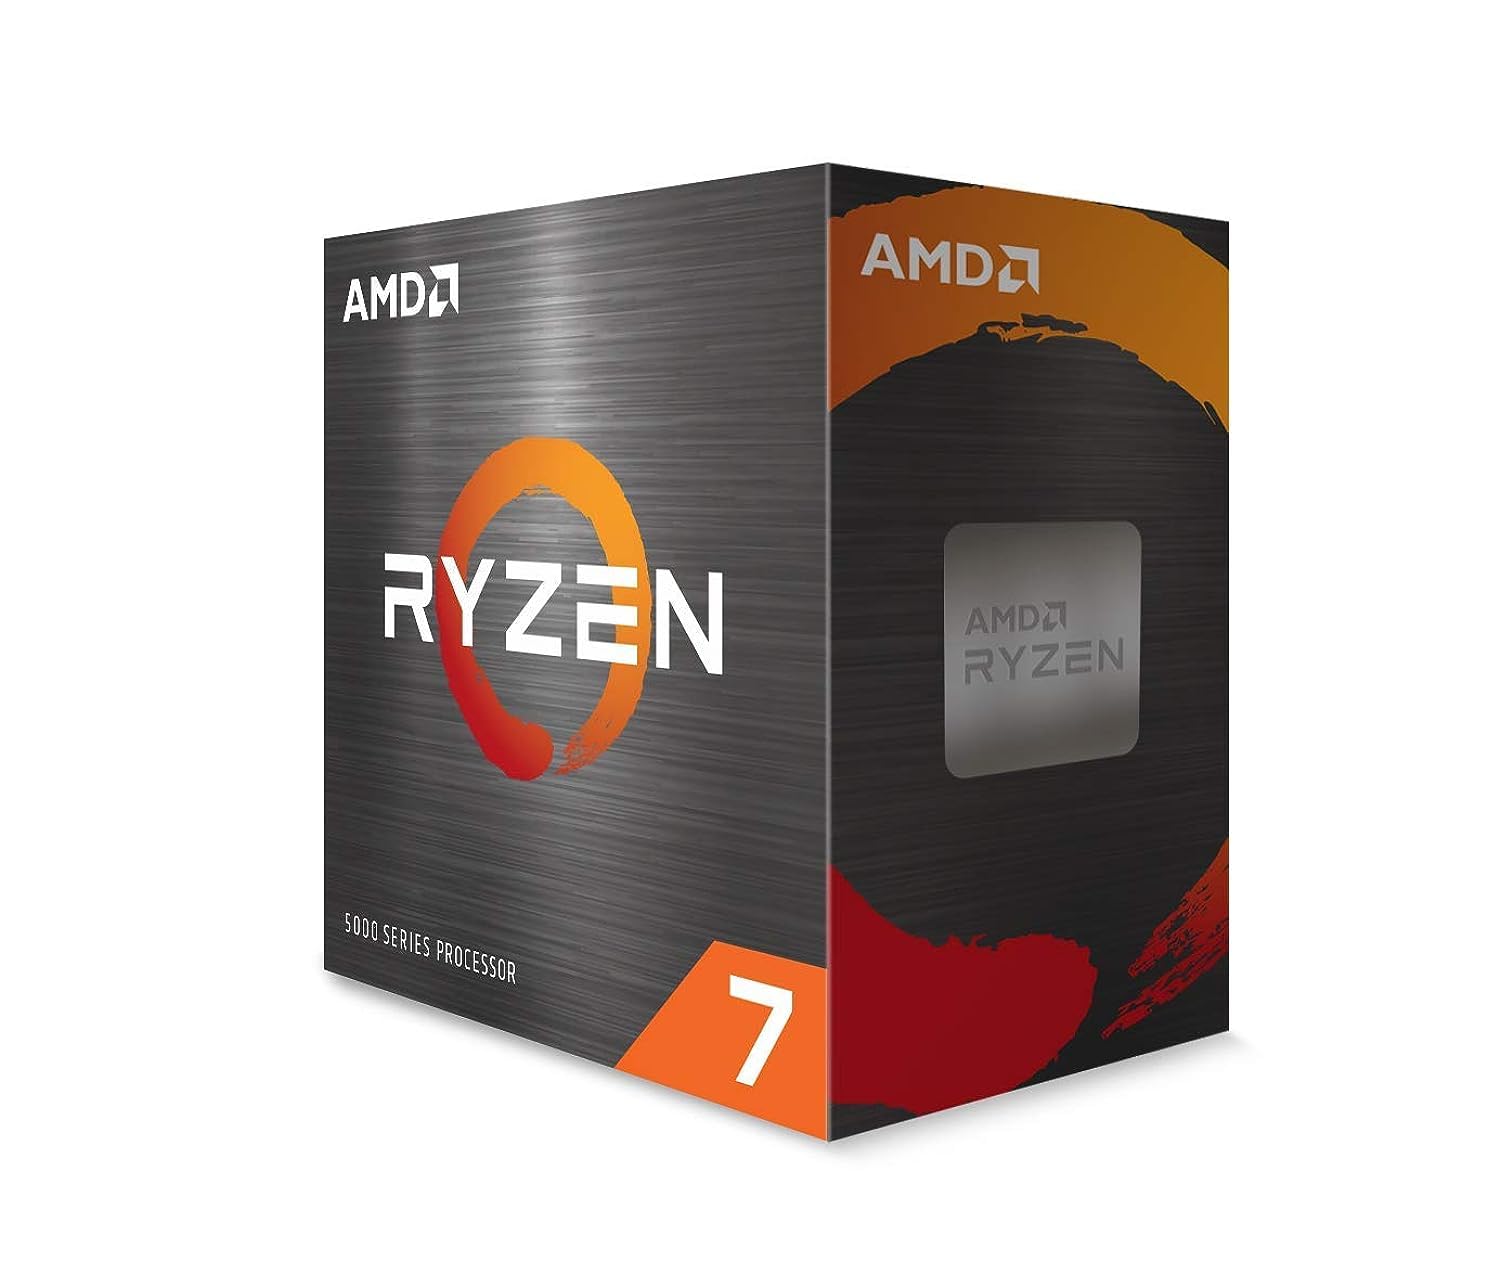 AMD Ryzen 7 5800X 3.8GHz 8-Core / 16-Thread AM4 Desktop Processor $175 + Free Shipping